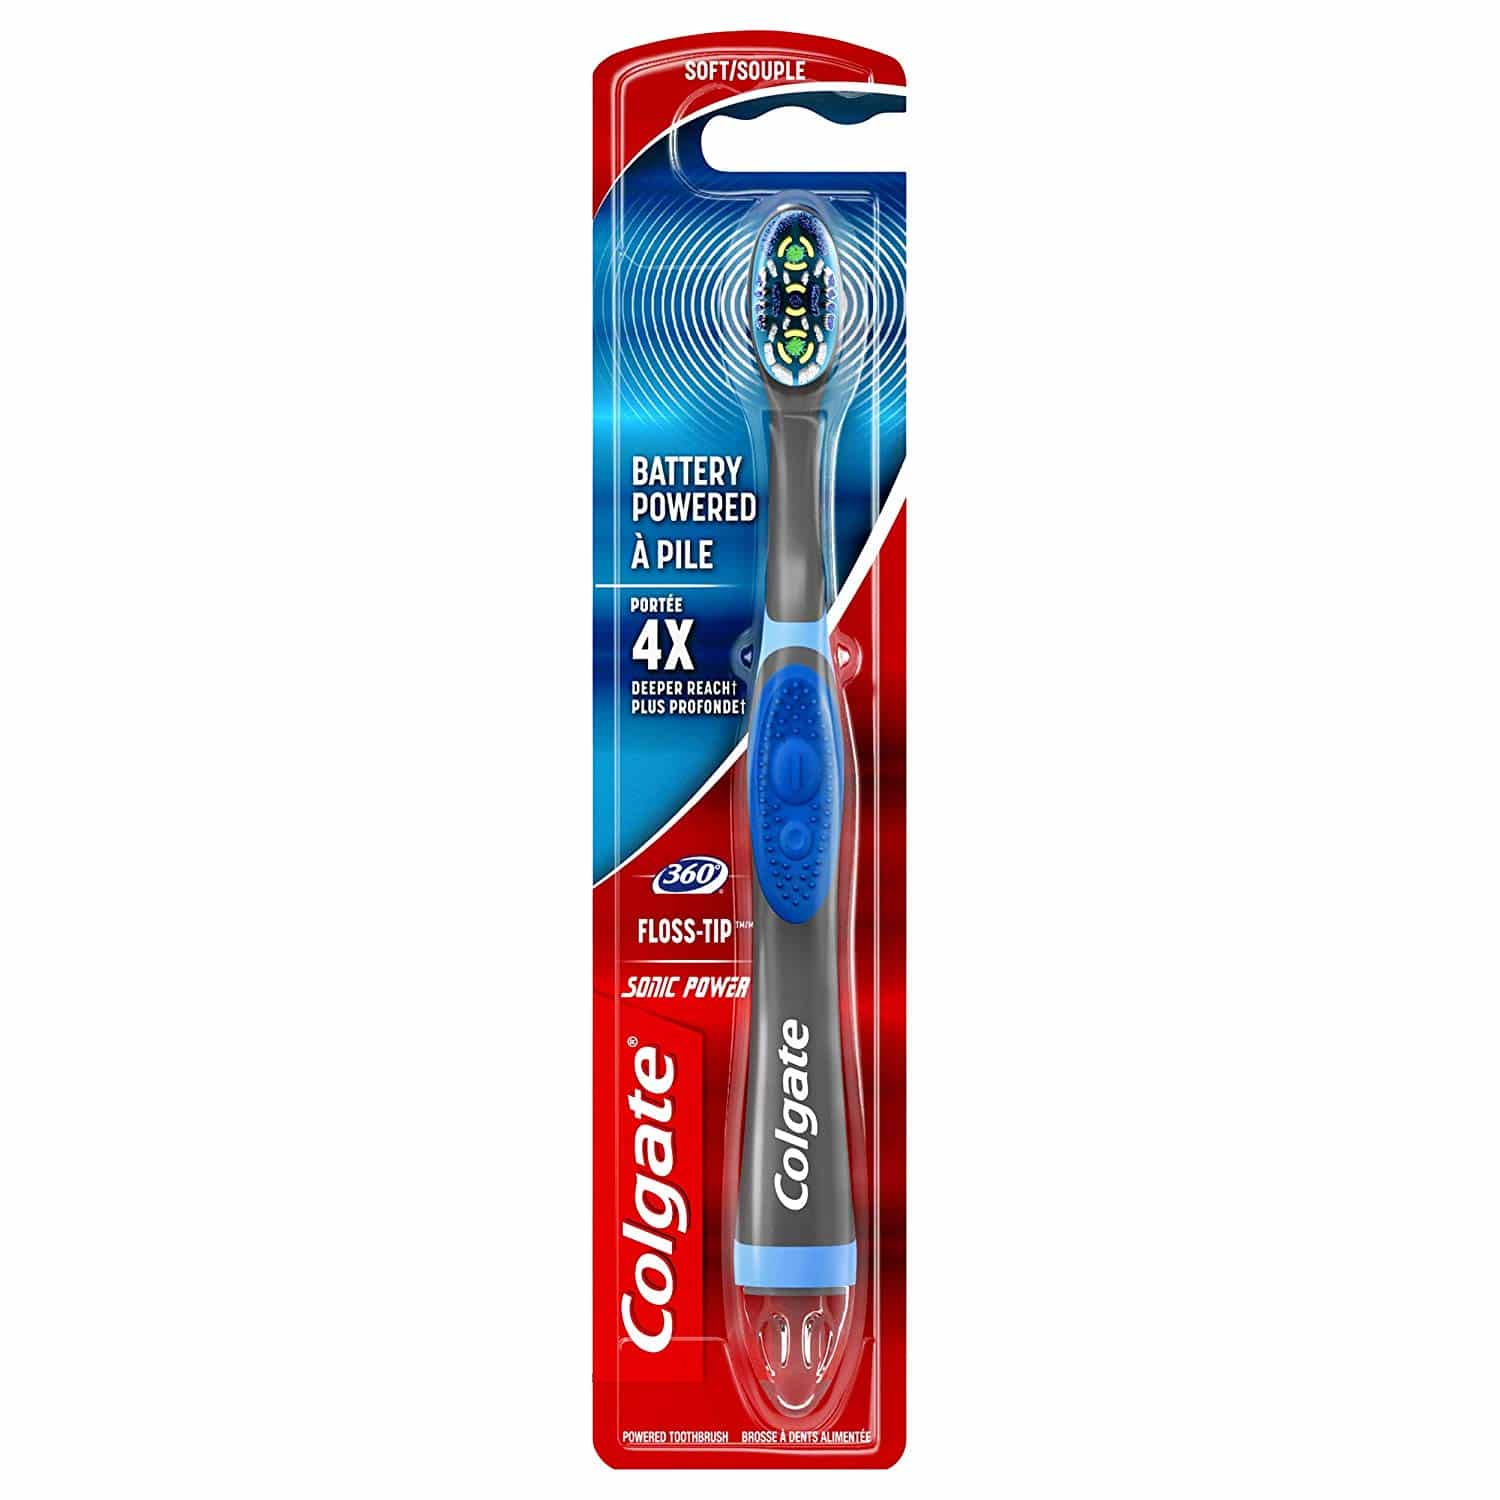 Colgate 360 Floss Tip-Sonic Power Toothbrush